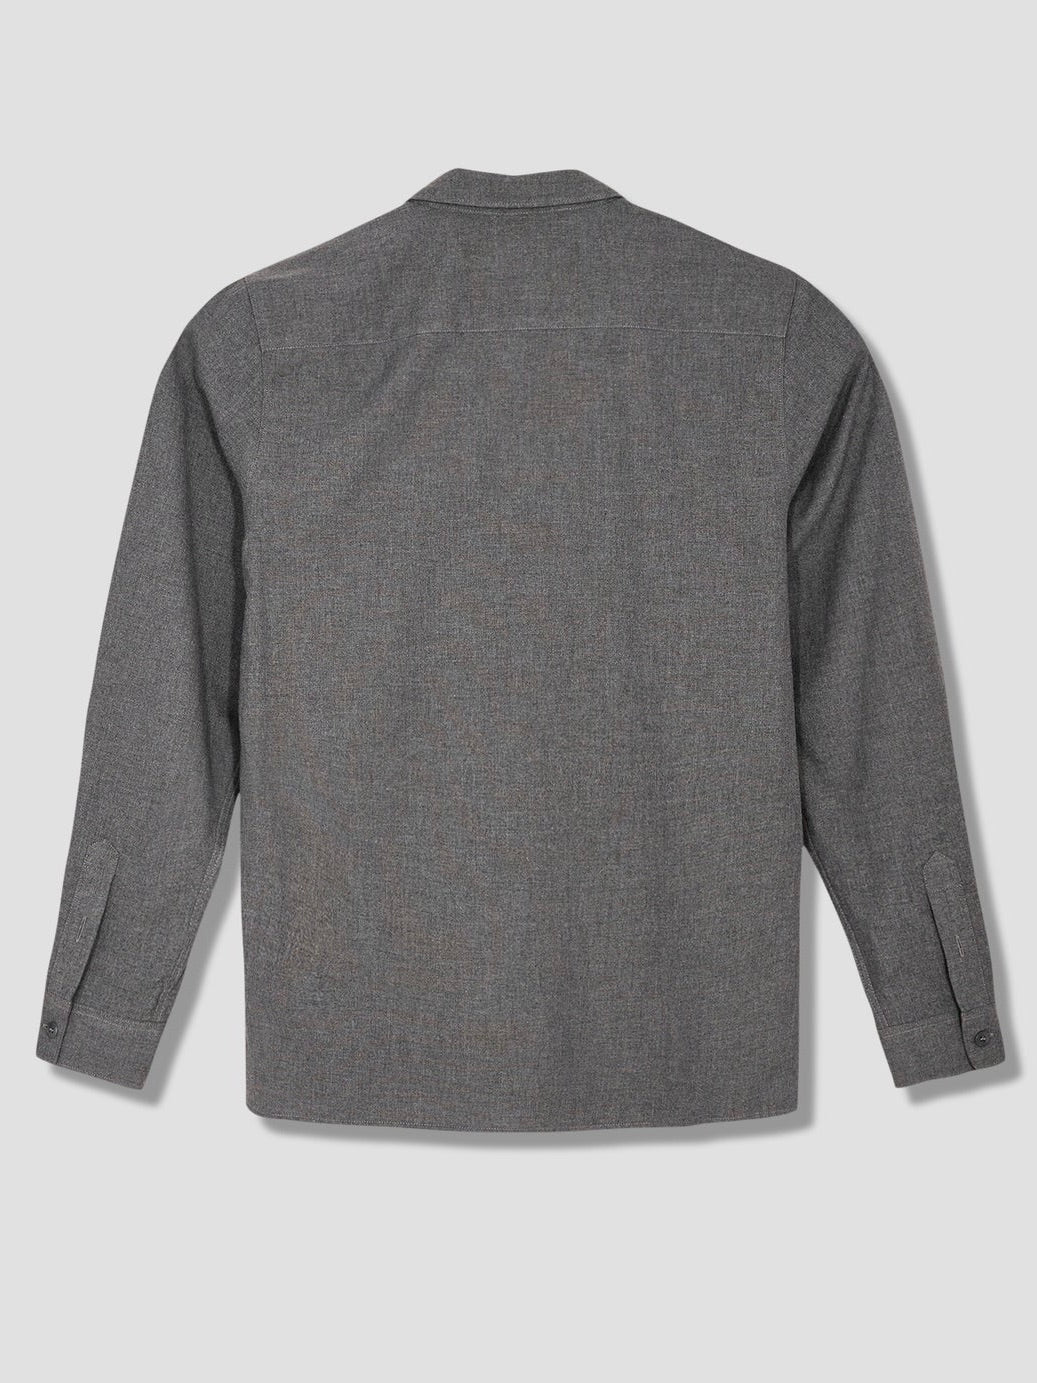 A.P.C Grey 'Vincent' Shirt